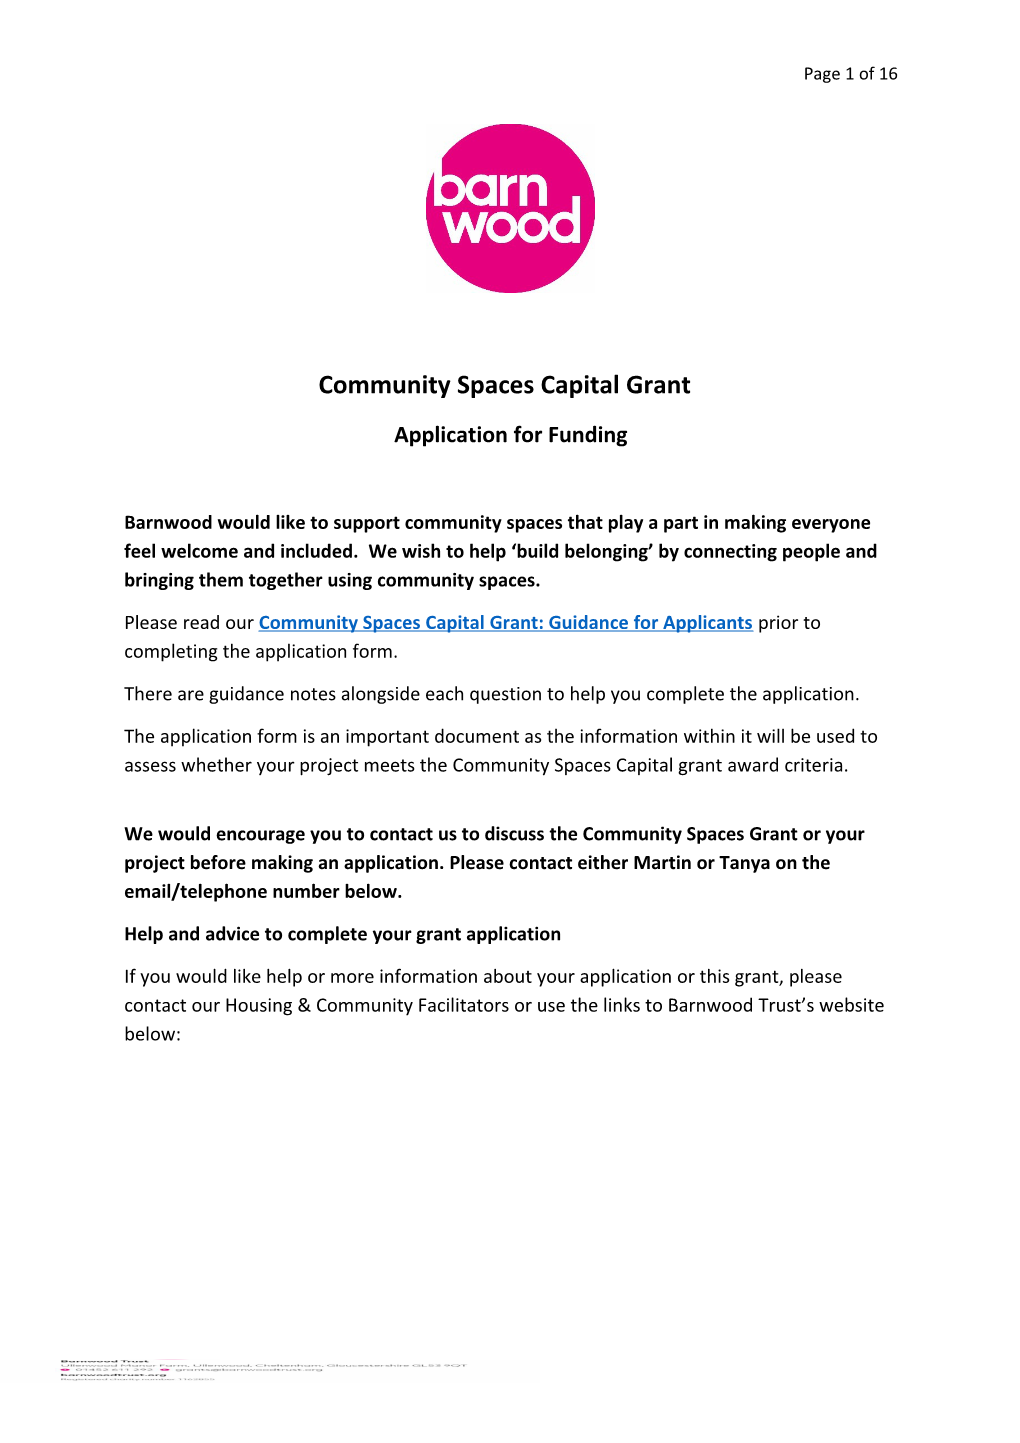 Community Spaces Capital Grant